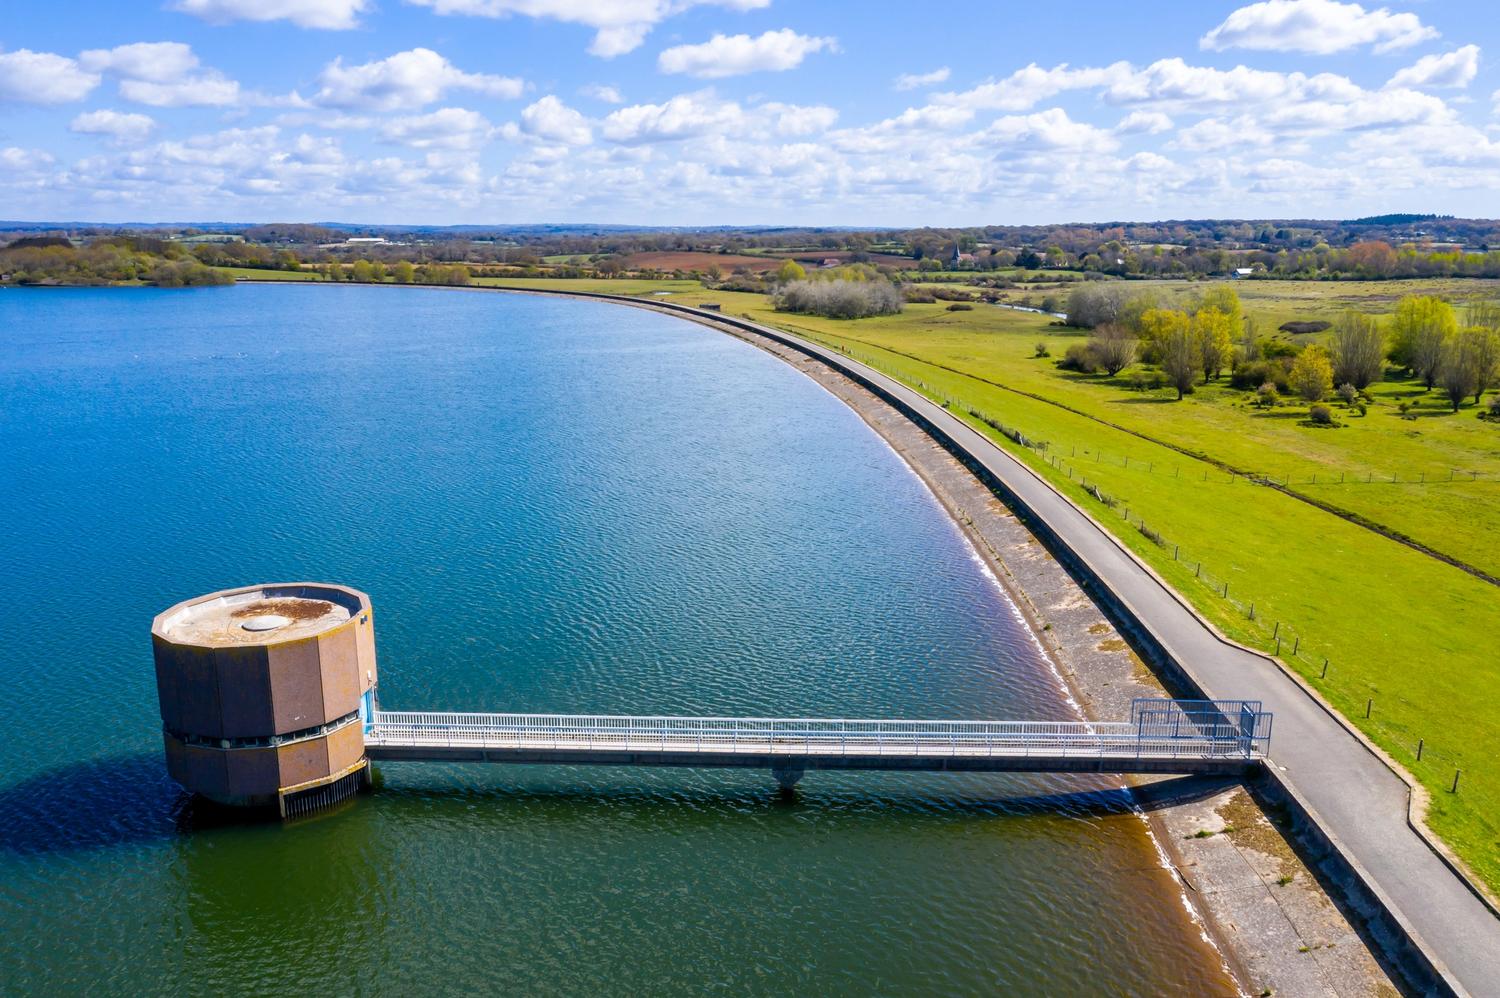 Arlington reservoir pumping station from above